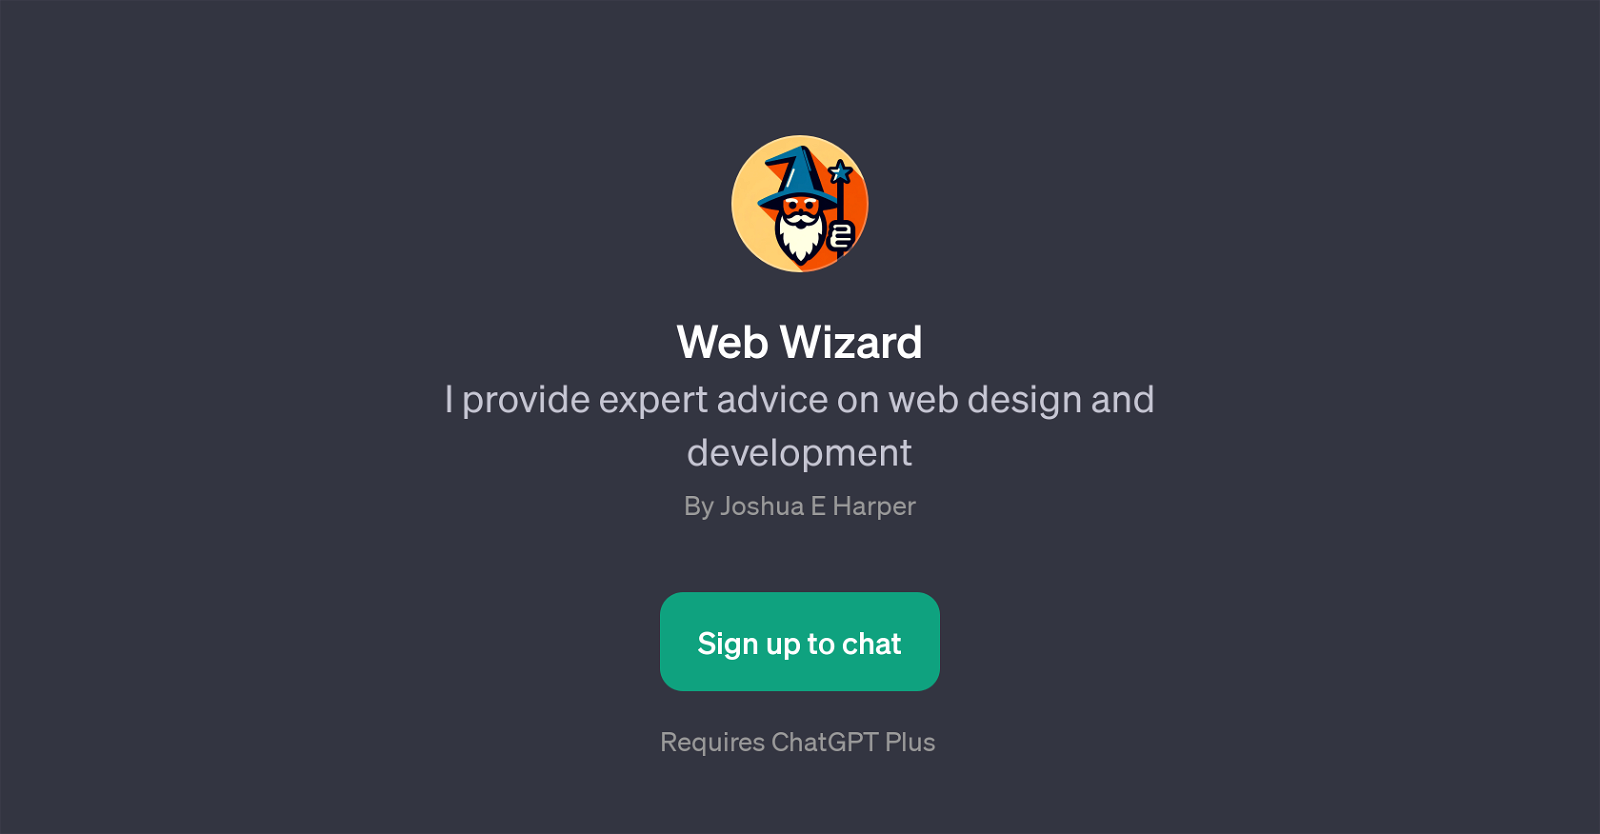 Web Wizard website